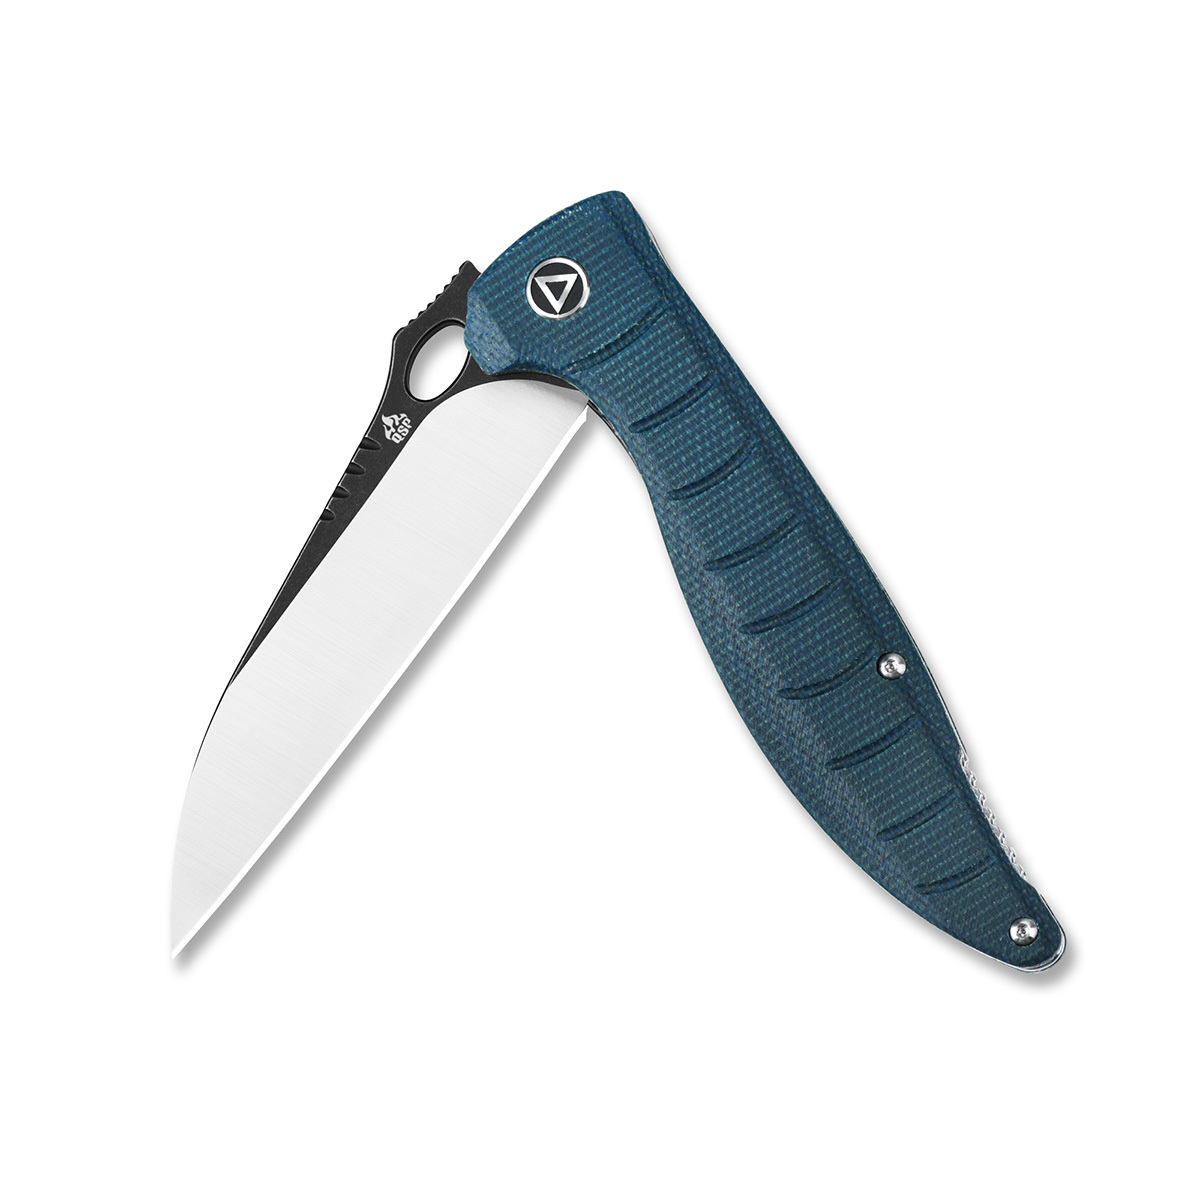 Складной нож Locust, сталь 154CM, рукоять микарта, синий - фото 2